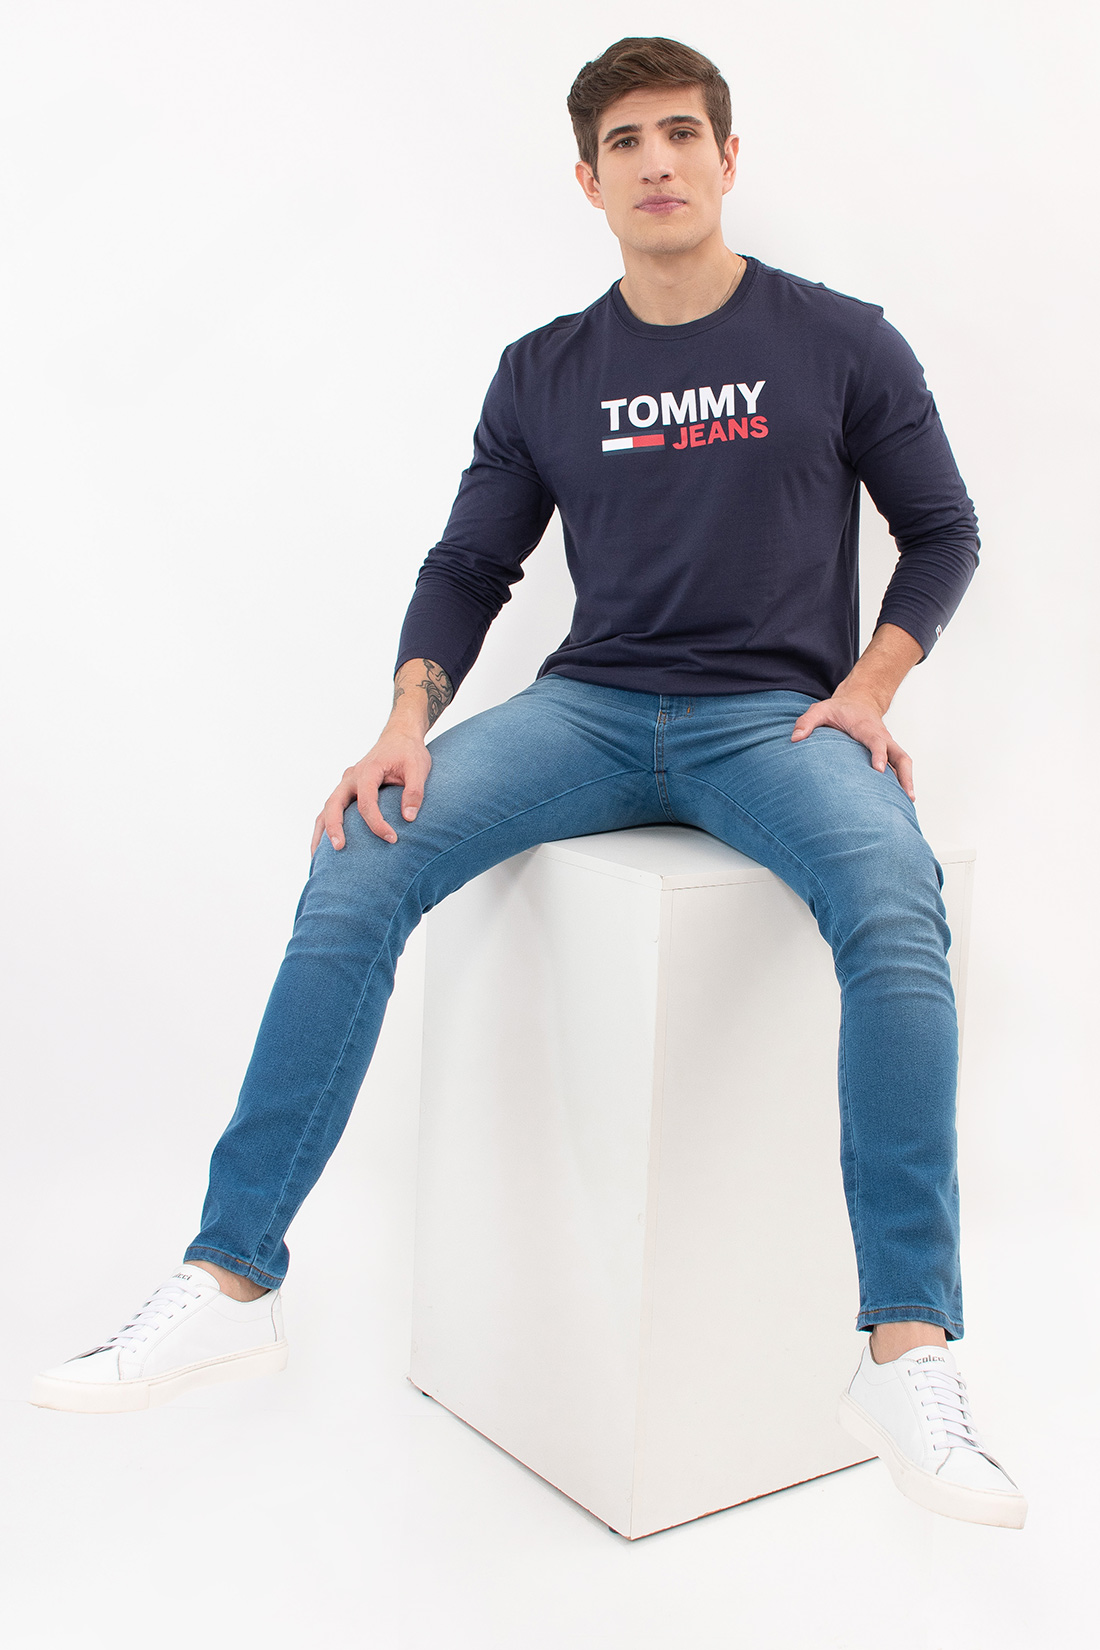 Camiseta Ml Tommy Hilfiger Logo Frontal